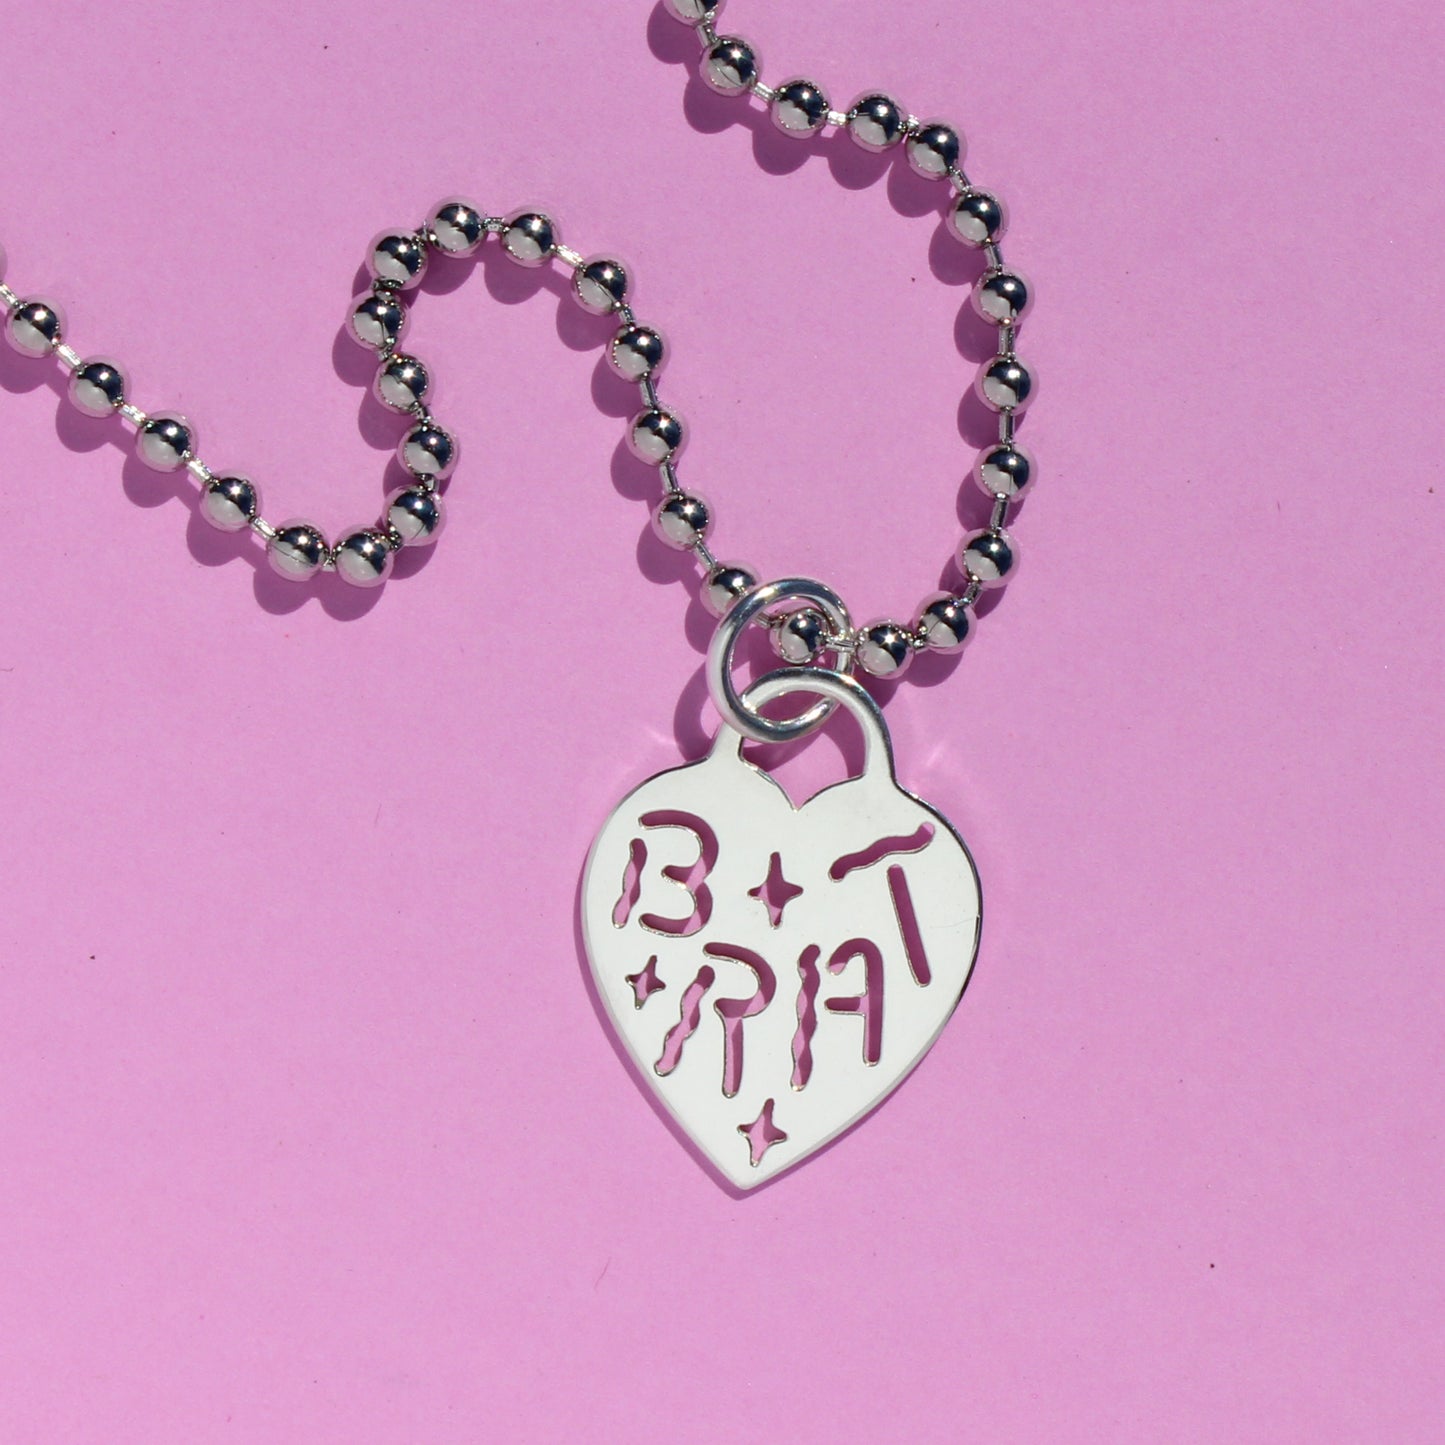 BRAT heart tag necklace